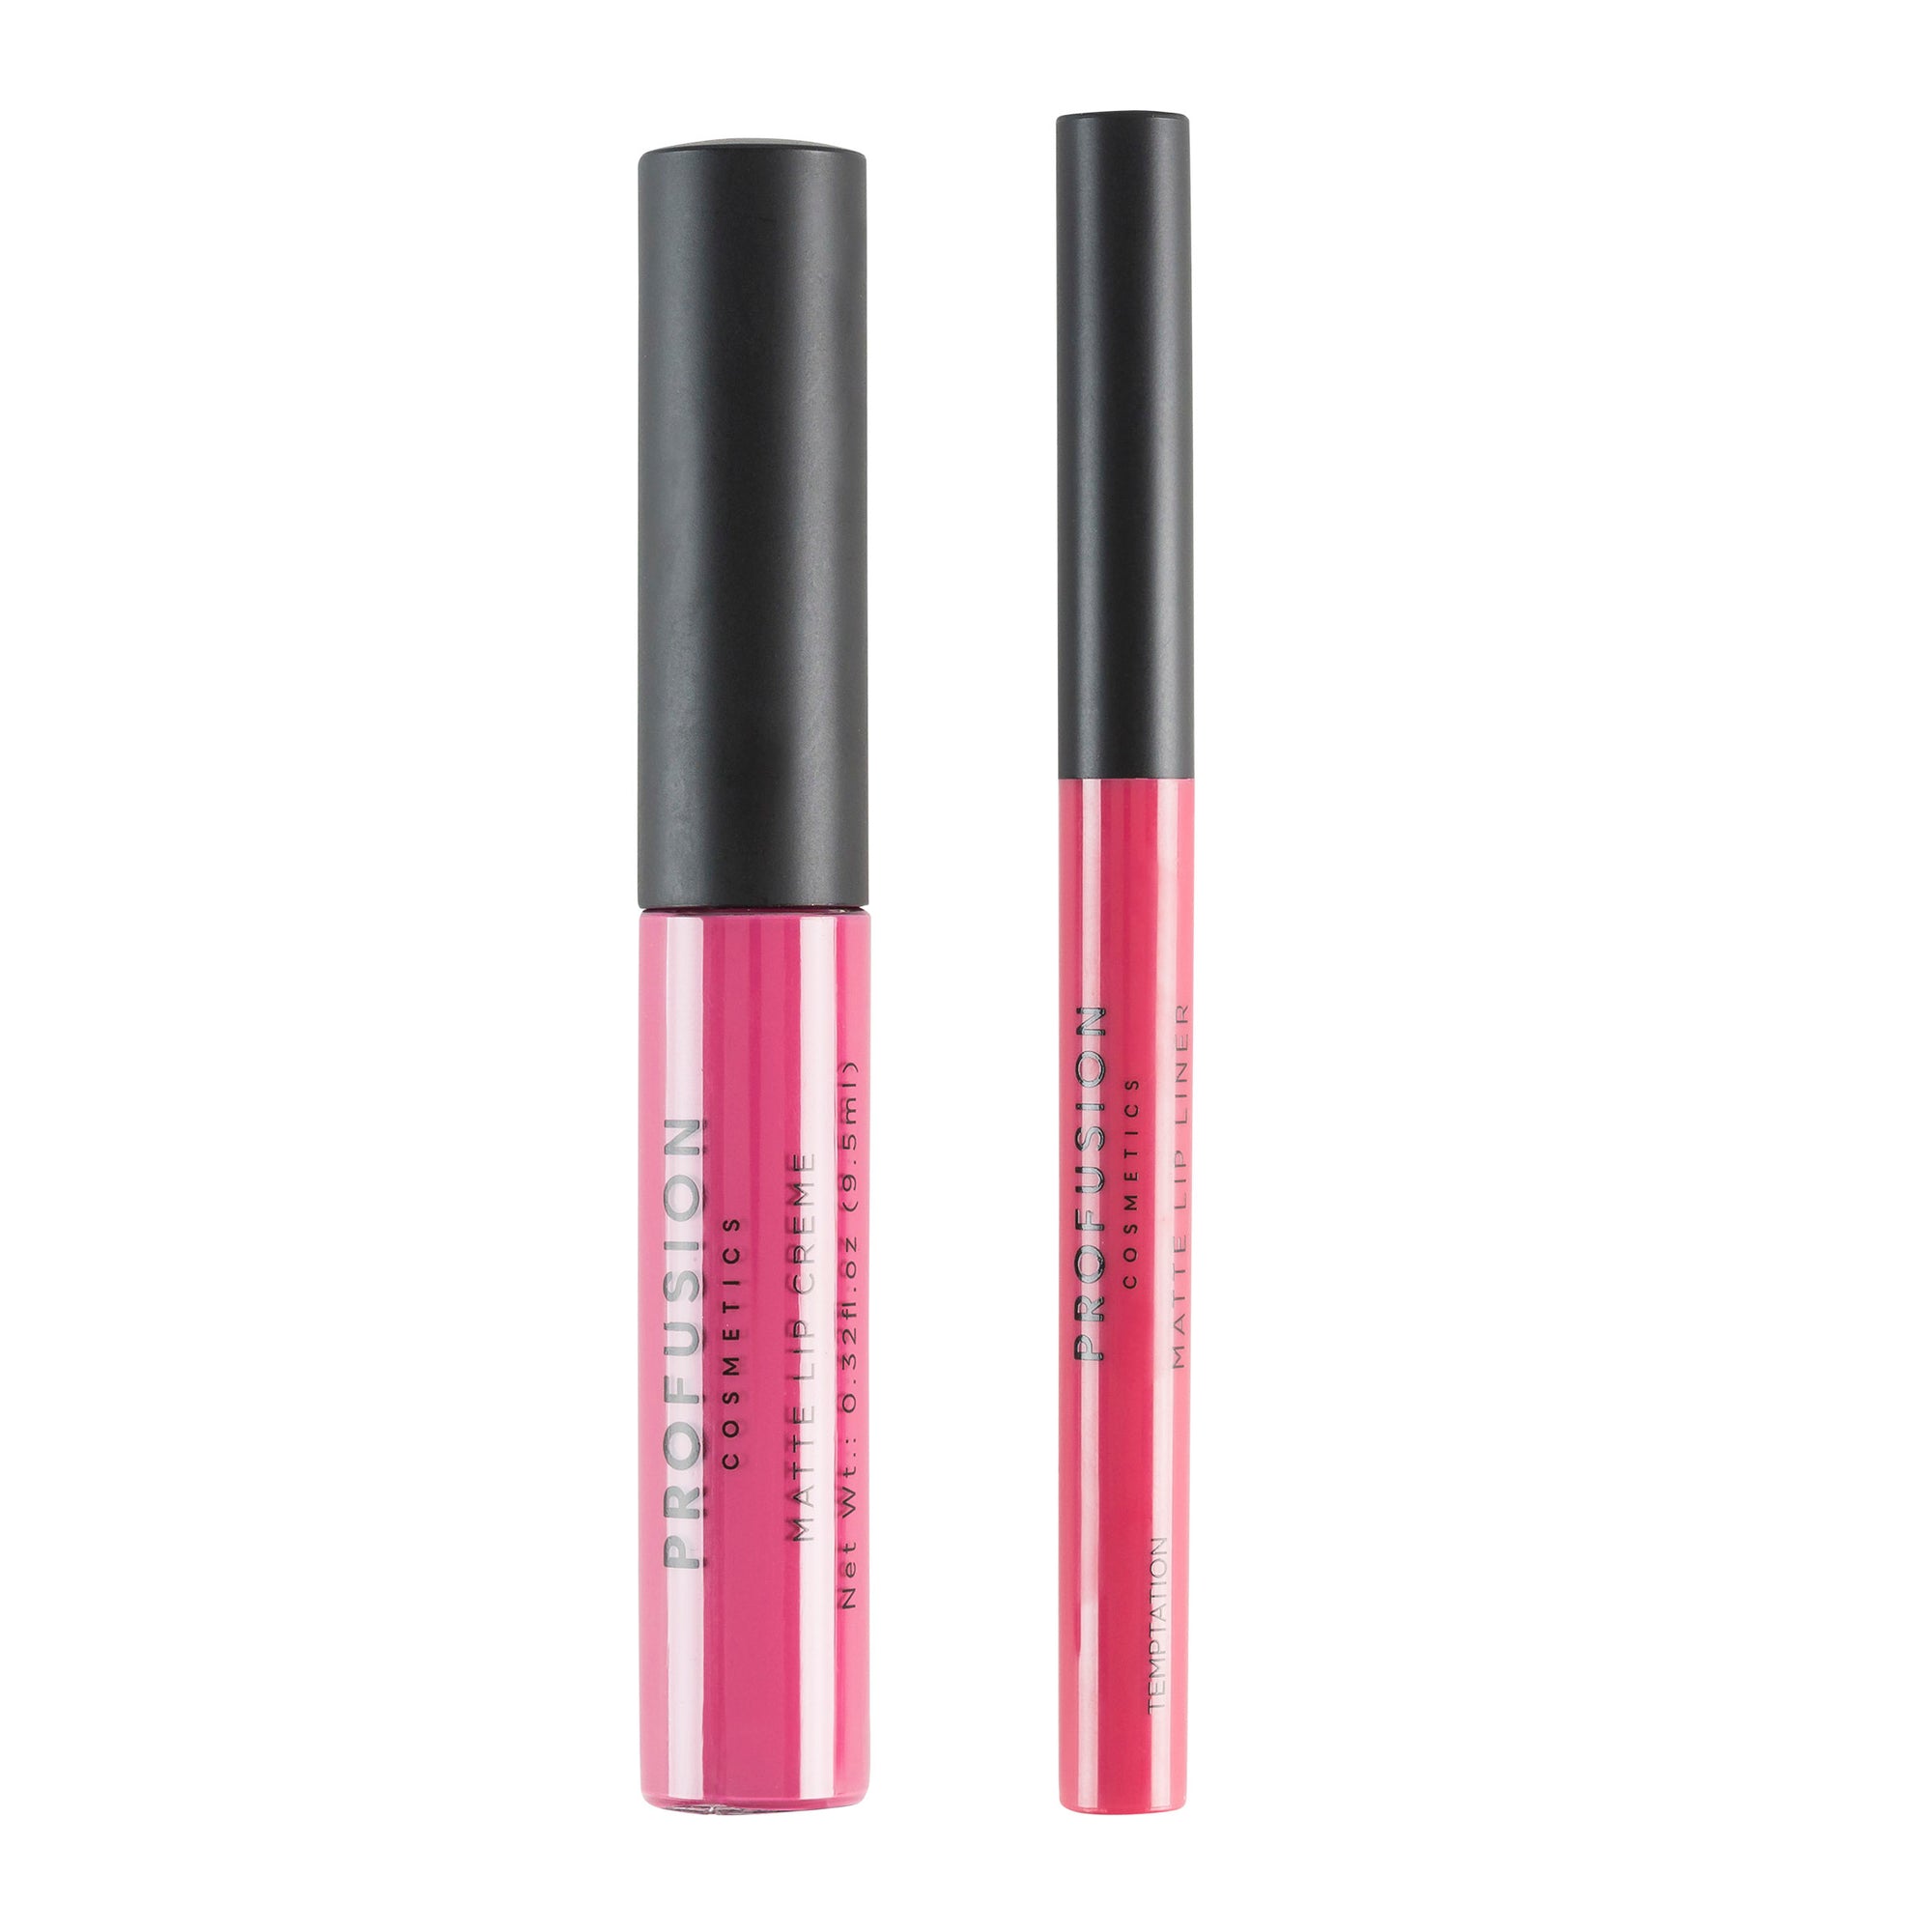 Profusion Lip Duo - Shop For Lip Kits Online! - Profusion Cosmetics